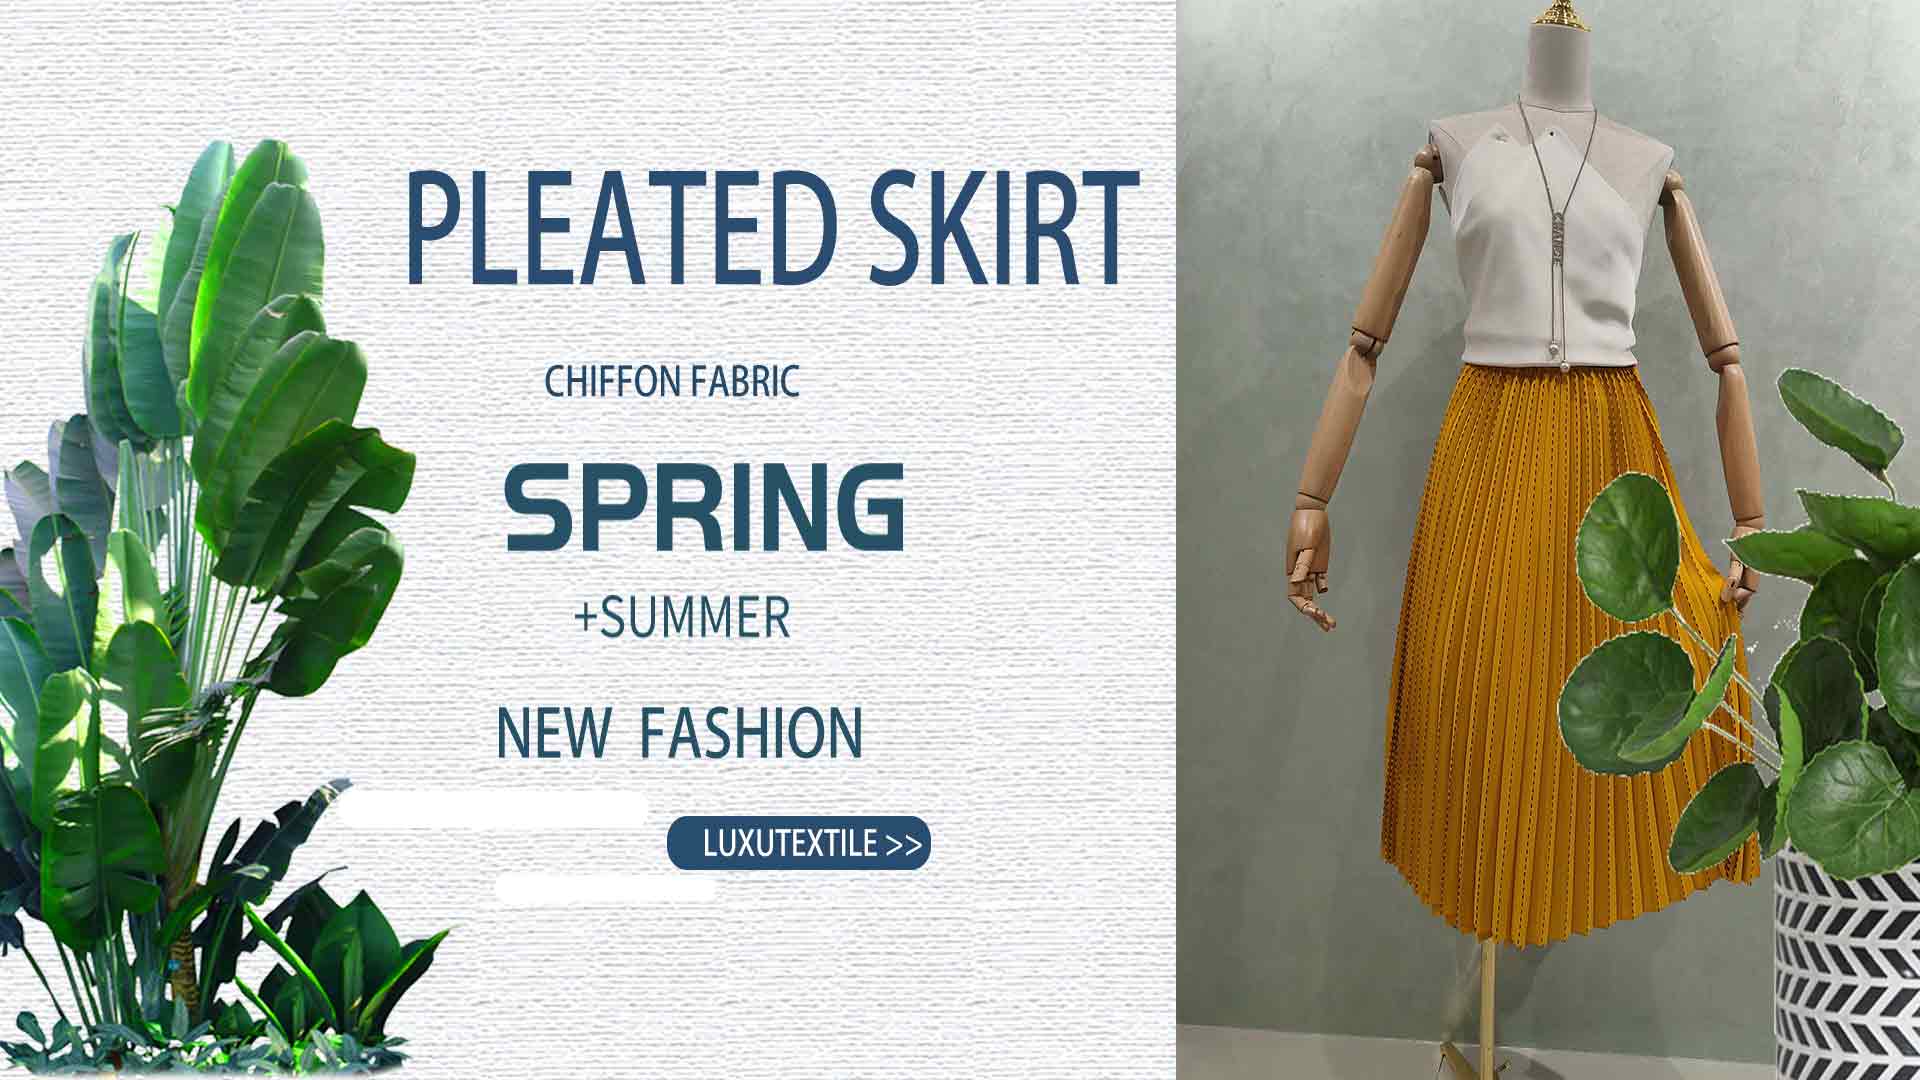 wholesale chiffon fabric skirt with inverted pleats